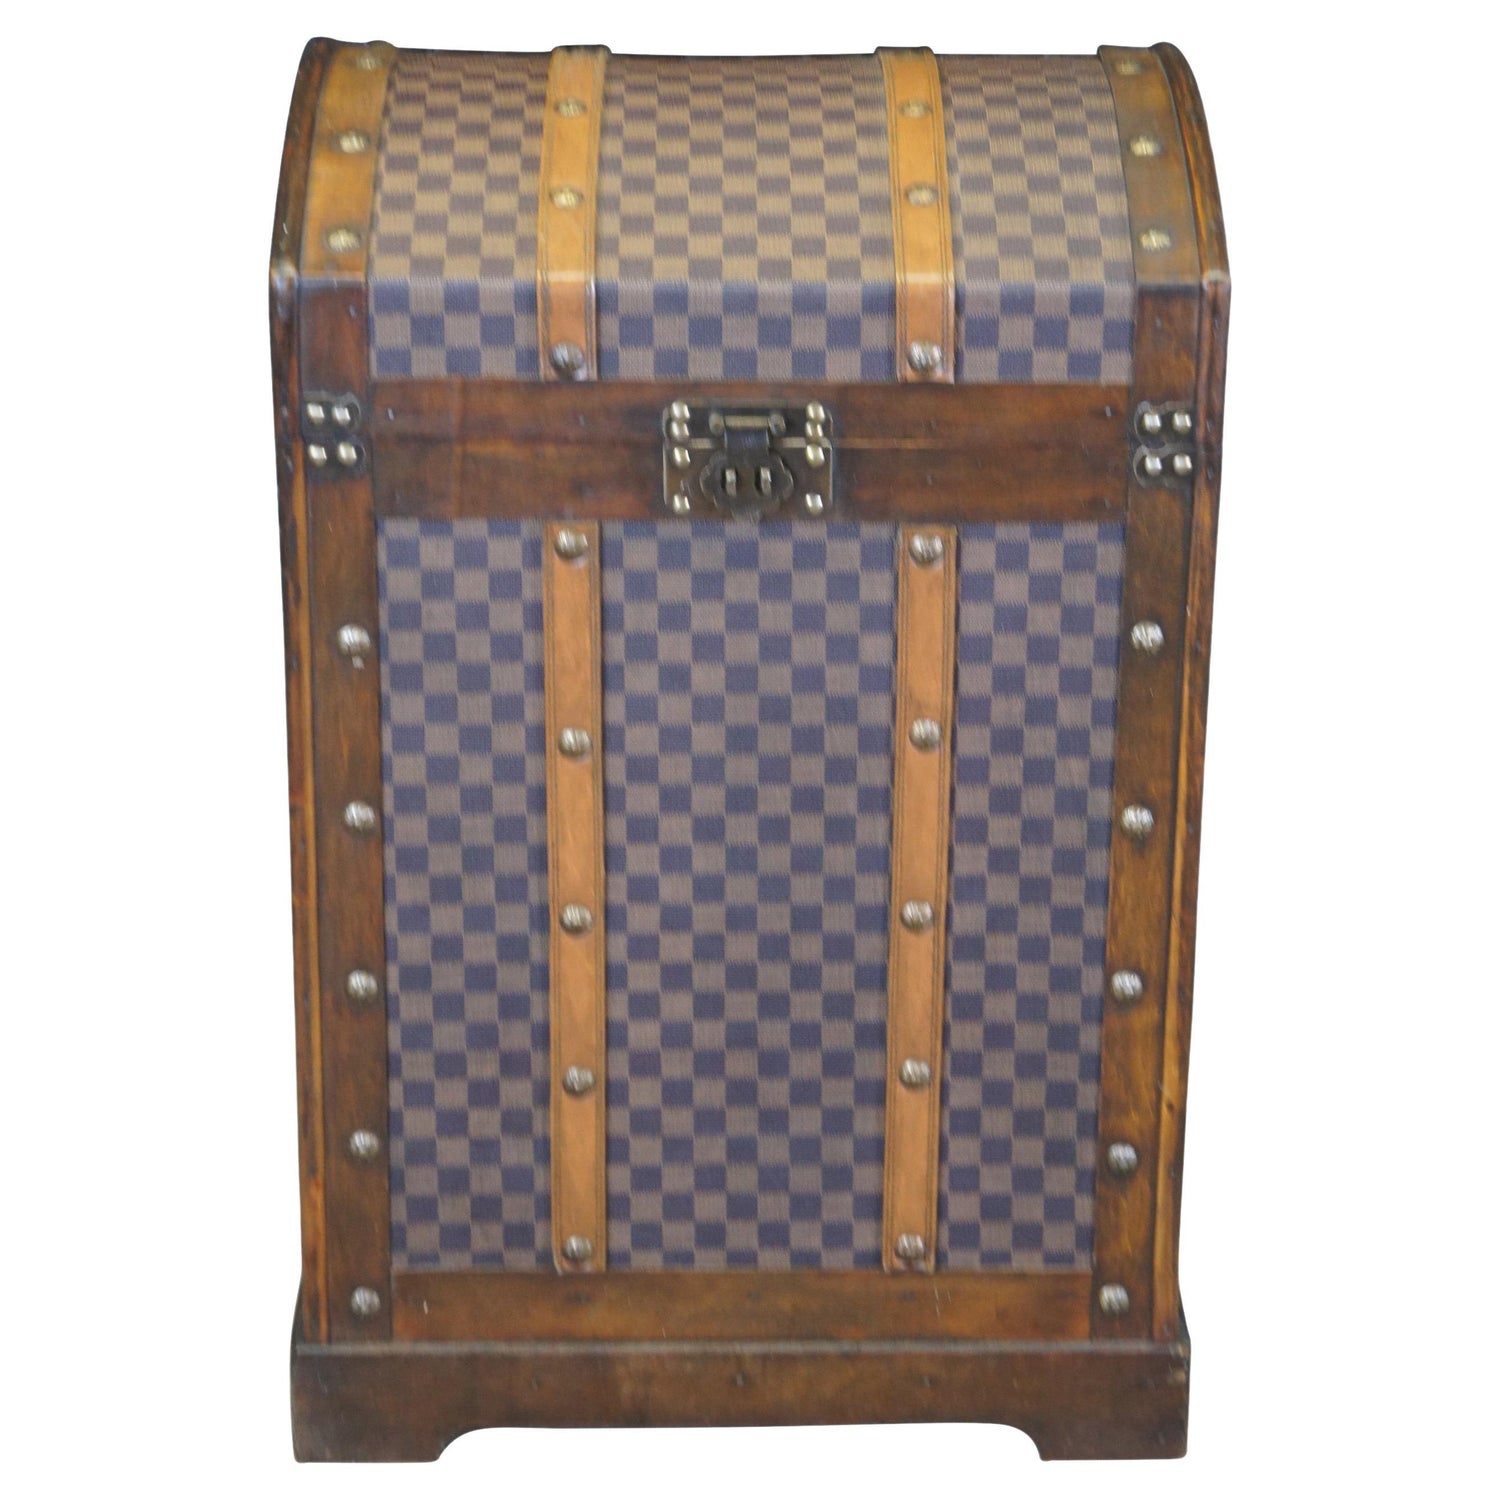 Louis Vuitton Paris Alize 24 Heures Brown Monogram Boston Duffel Travel Bag